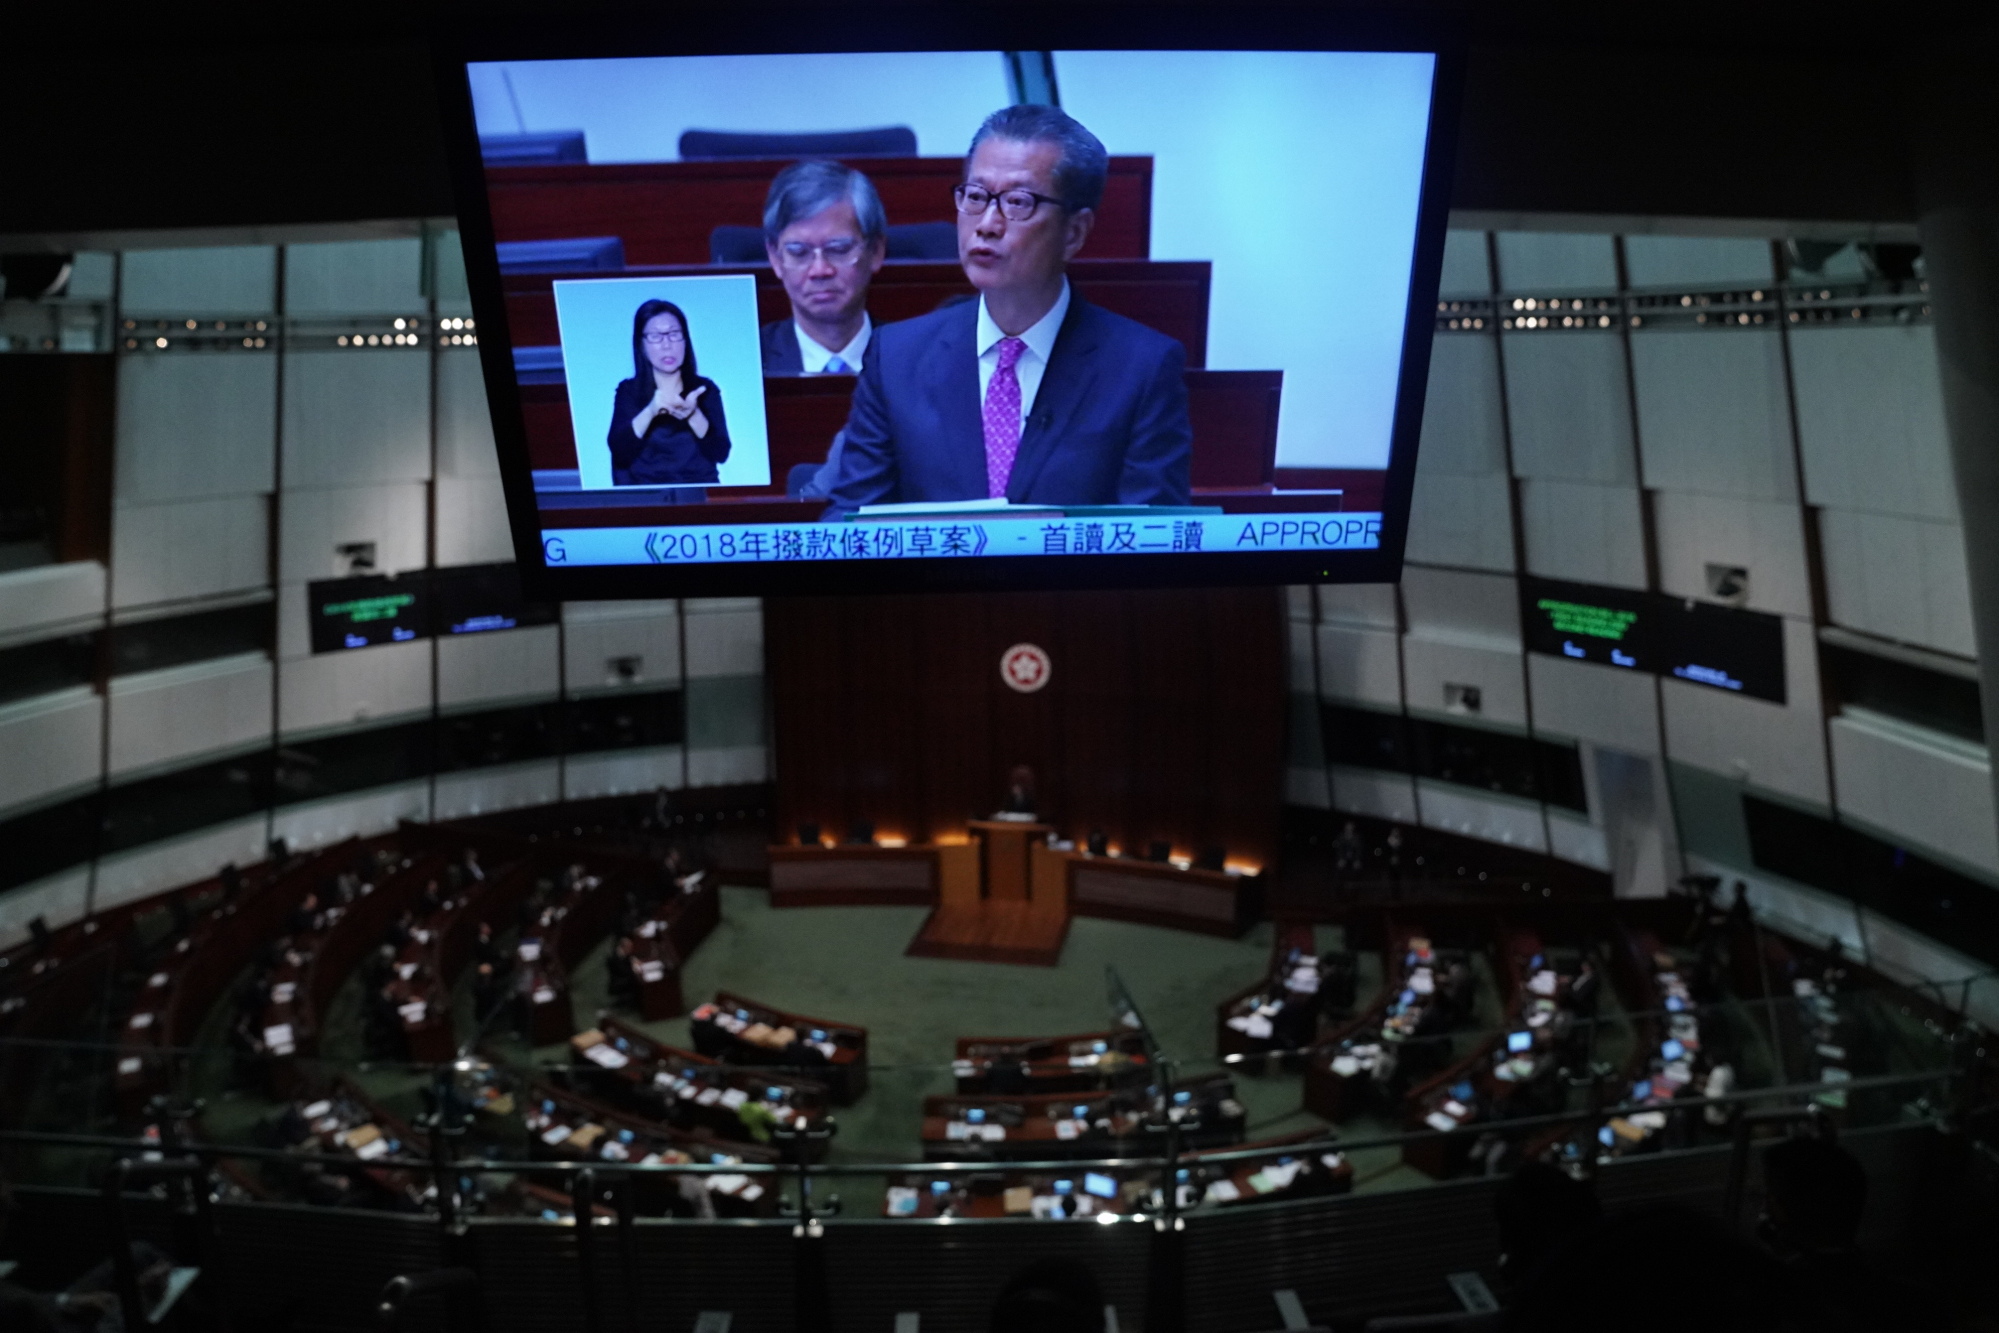 Hong Kong Financial Secretary Paul Chan Delivers Budget Speech at Legislative Council